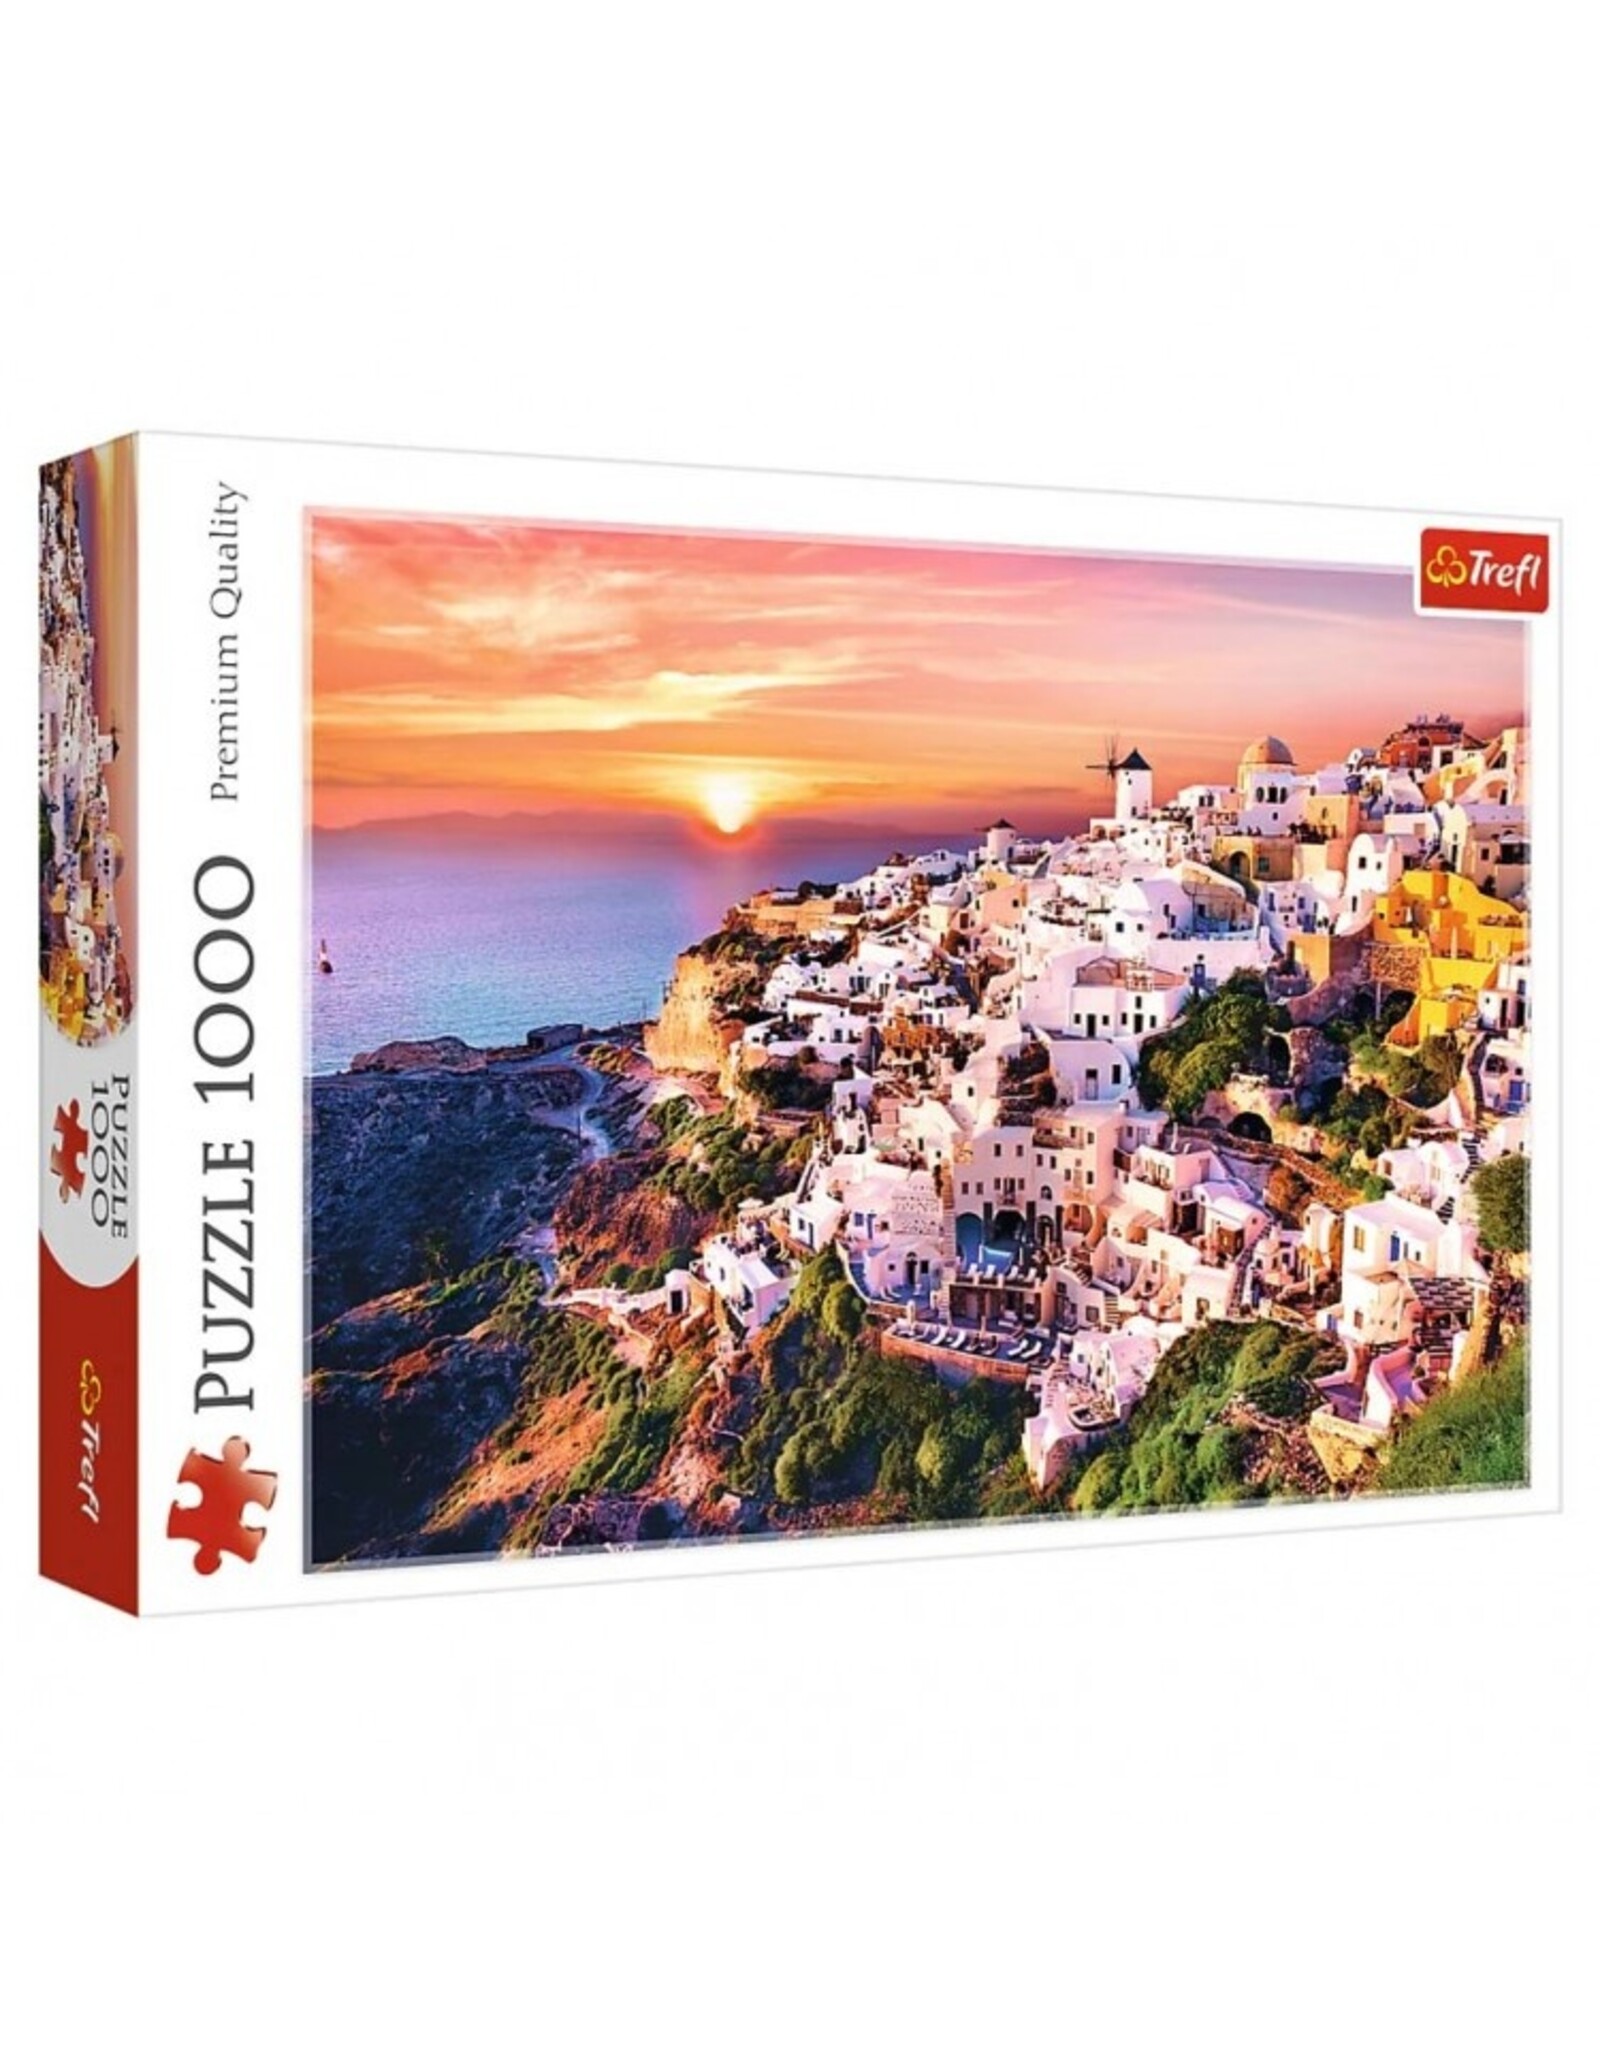 Trefl Puzzle: Sunset Over Santorini 1000pc